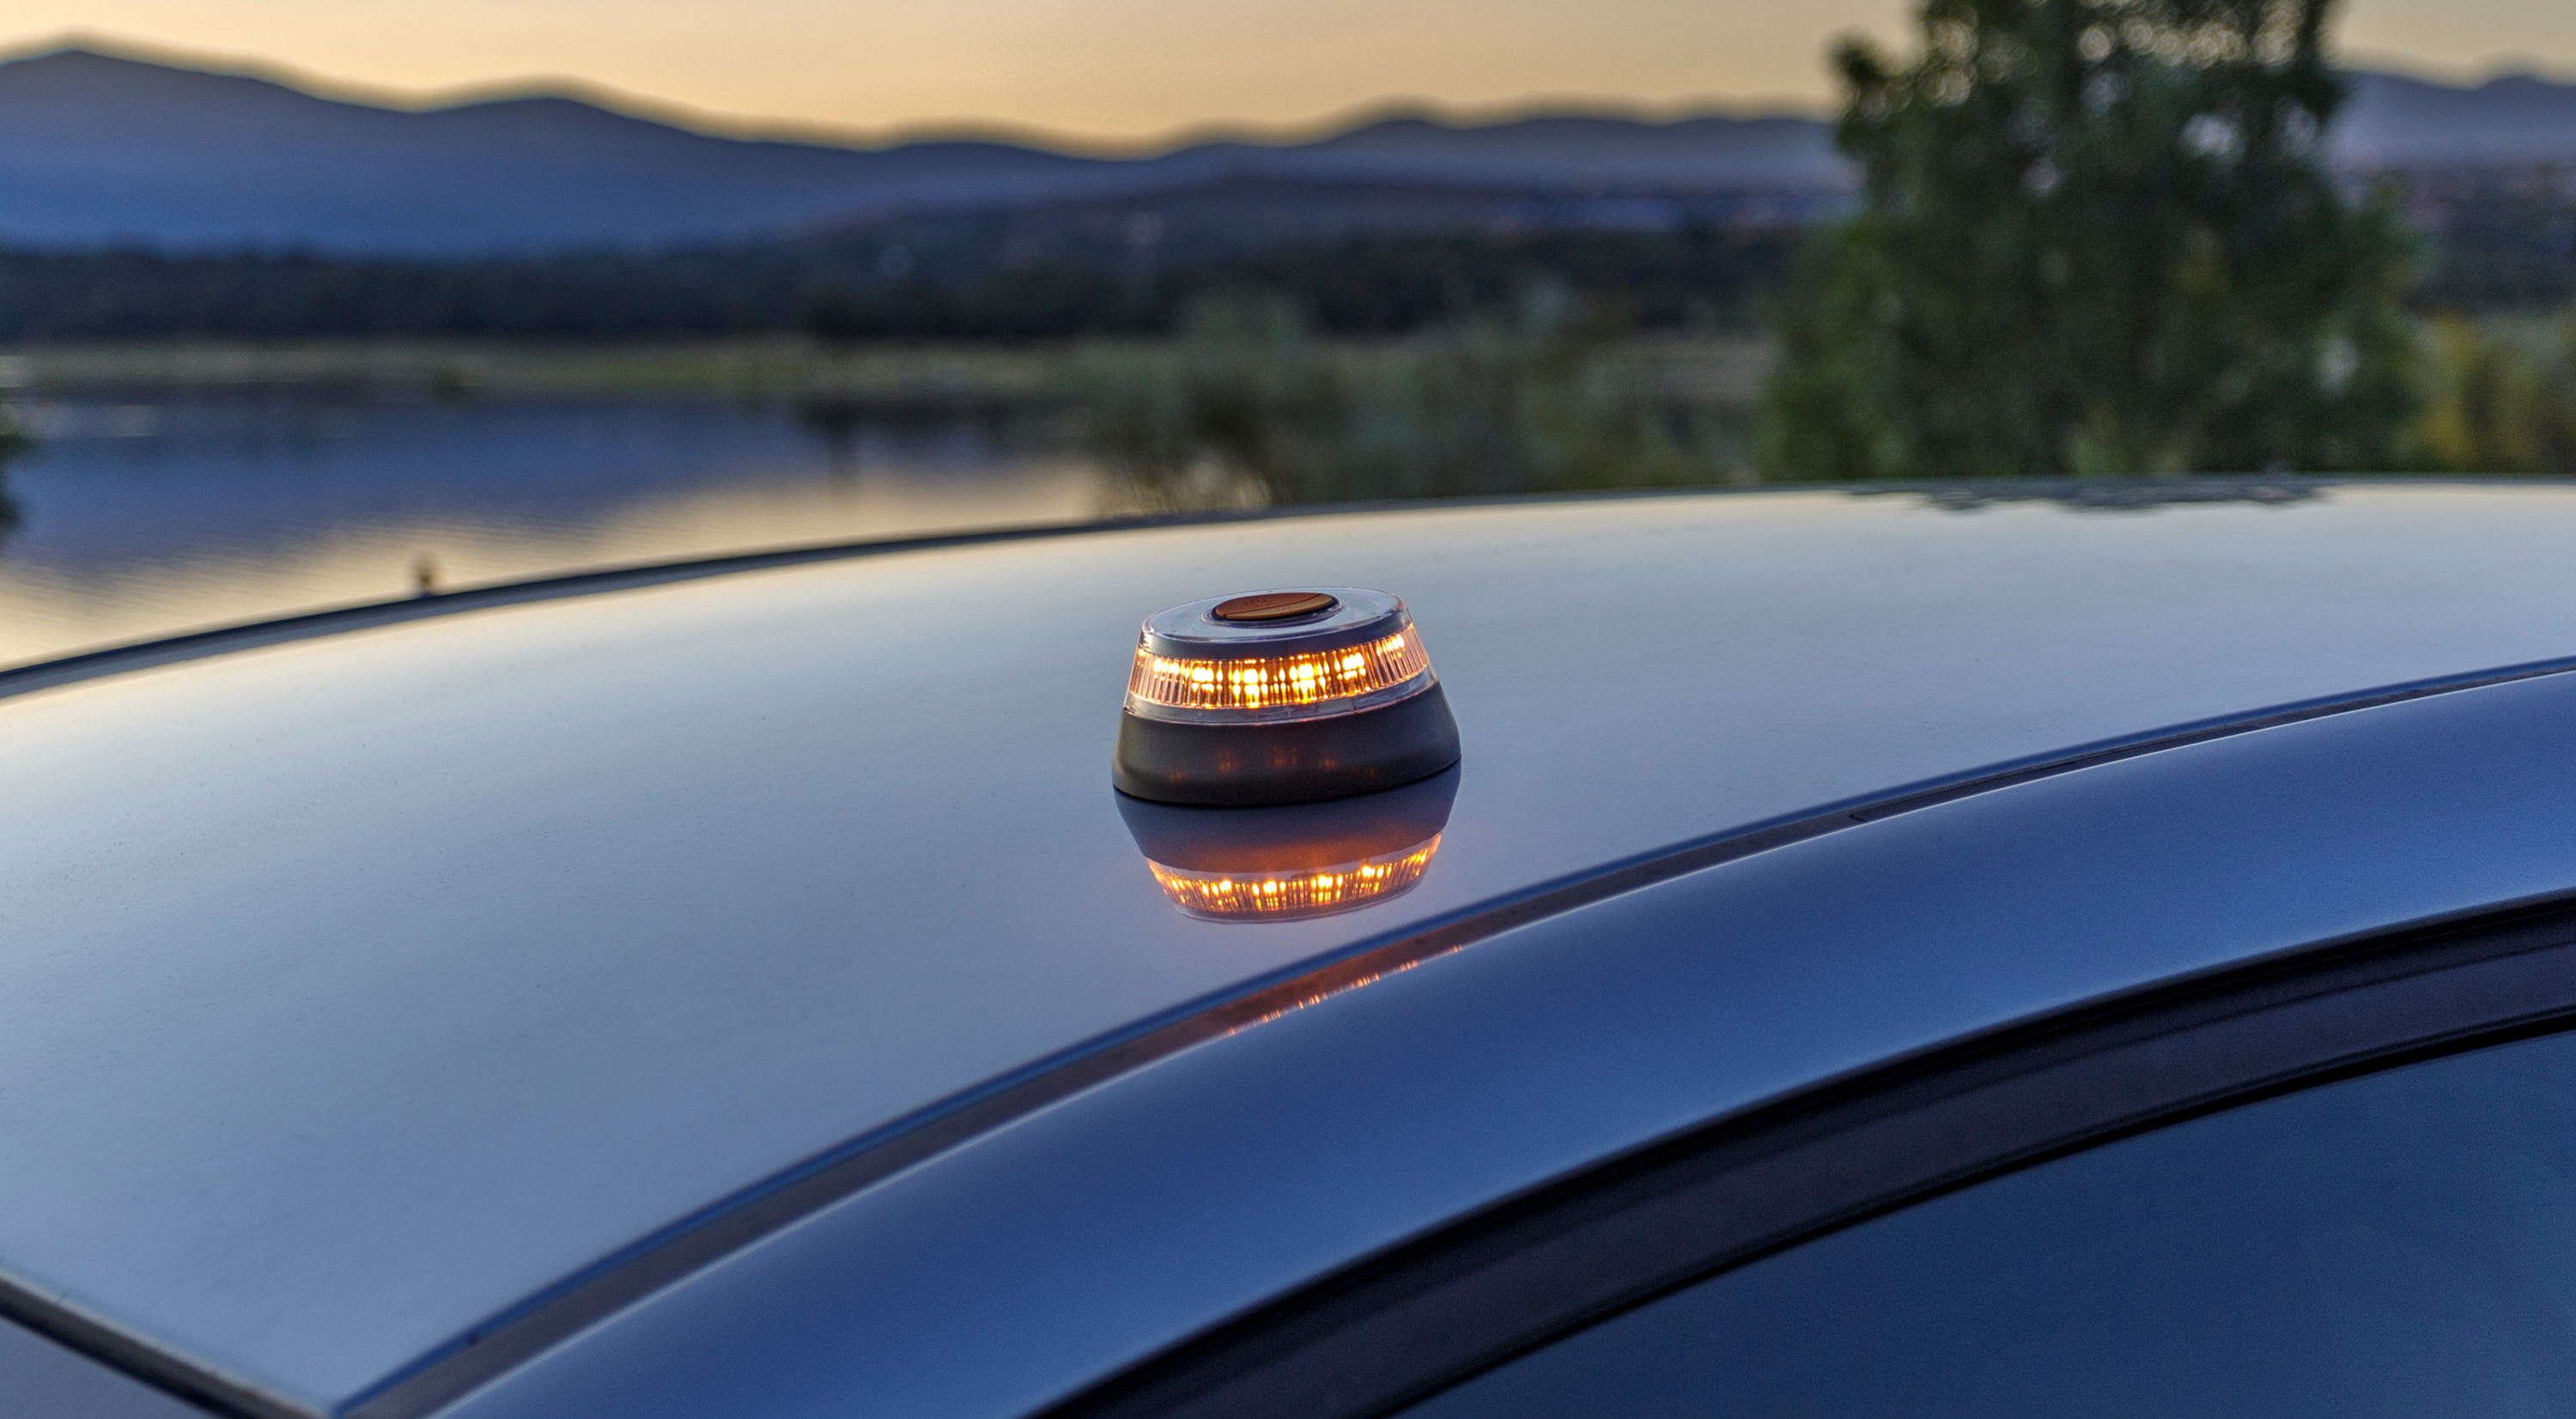 luz emergencia coche v16 homologada dgt help flash smart strobe